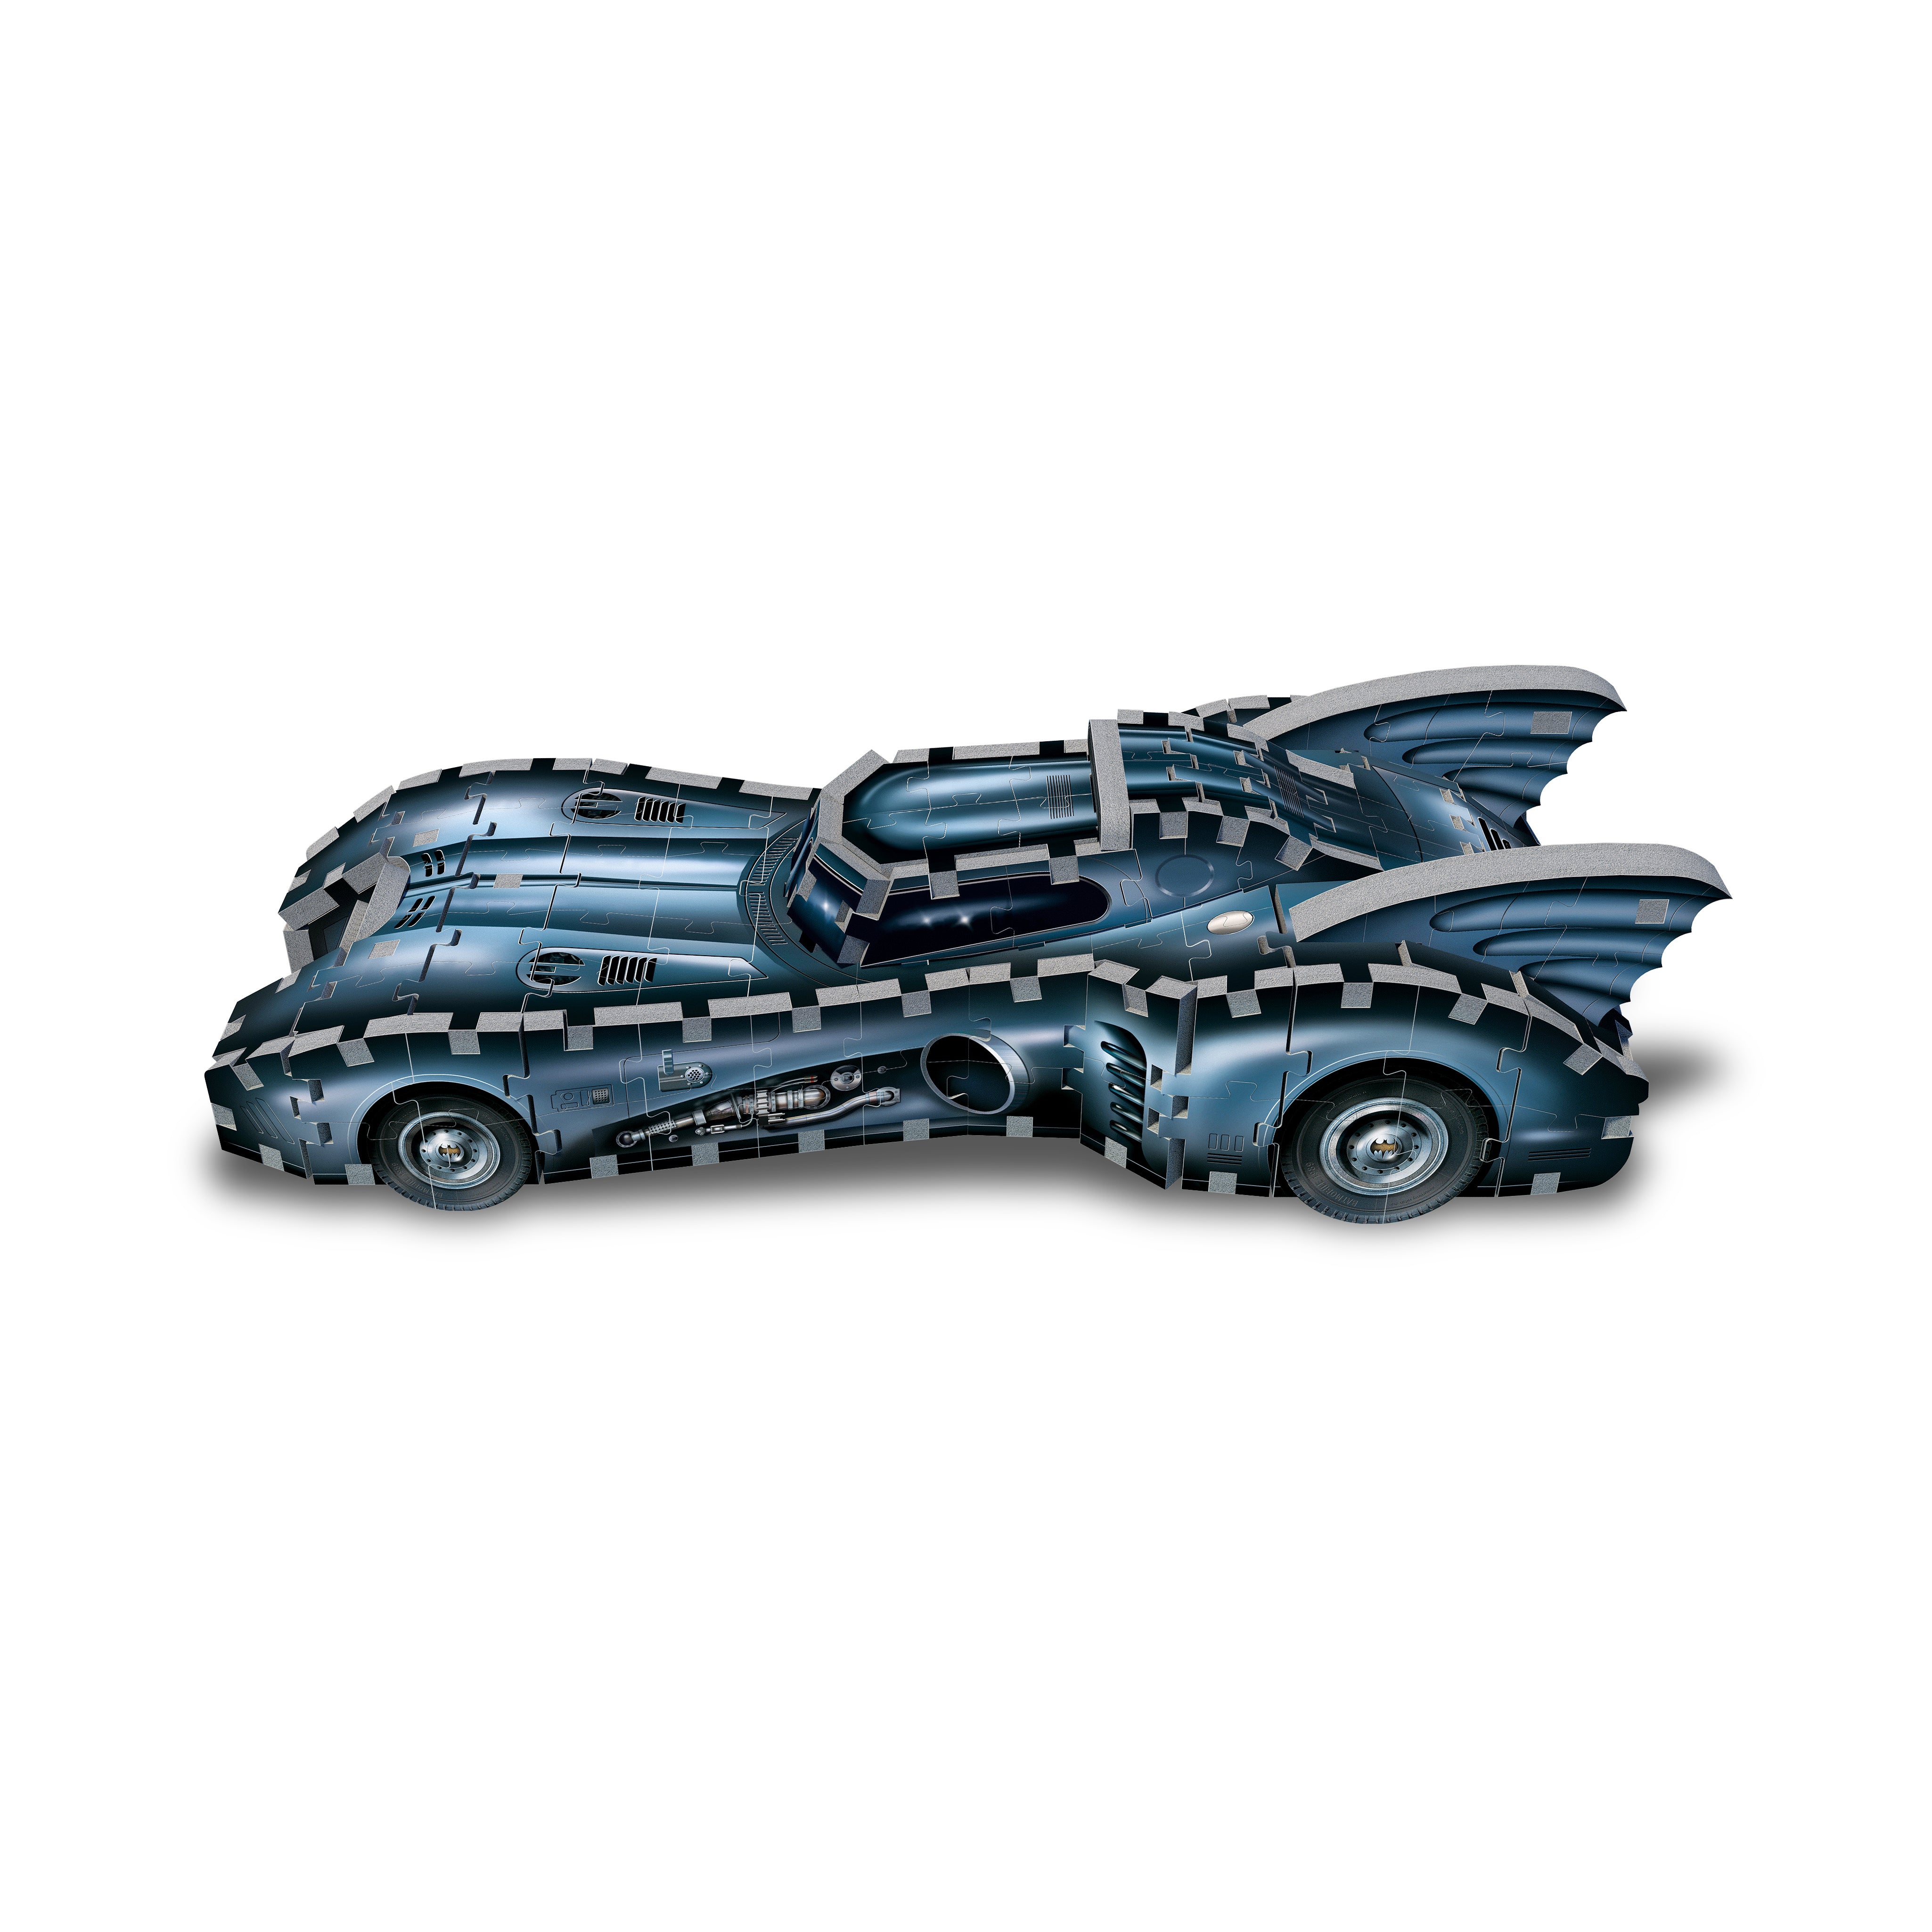 Batmobile Lego Set Reproduces 1989 Tim Burton Movie Classic Car